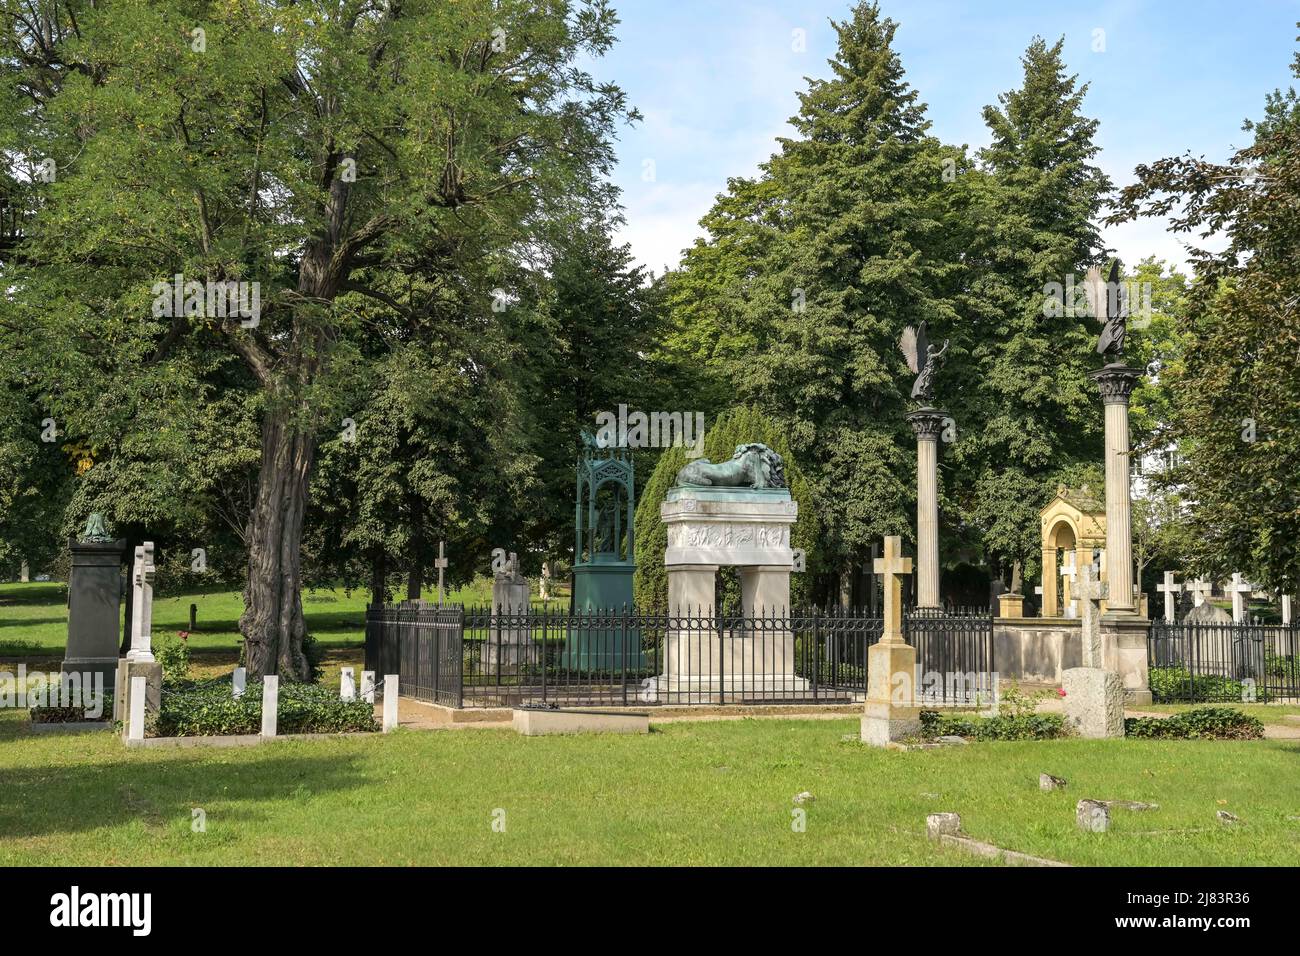 Invalidenfriedhof, Scharnhorststrasse, Mitte, Berlin, Germany Stock Photo